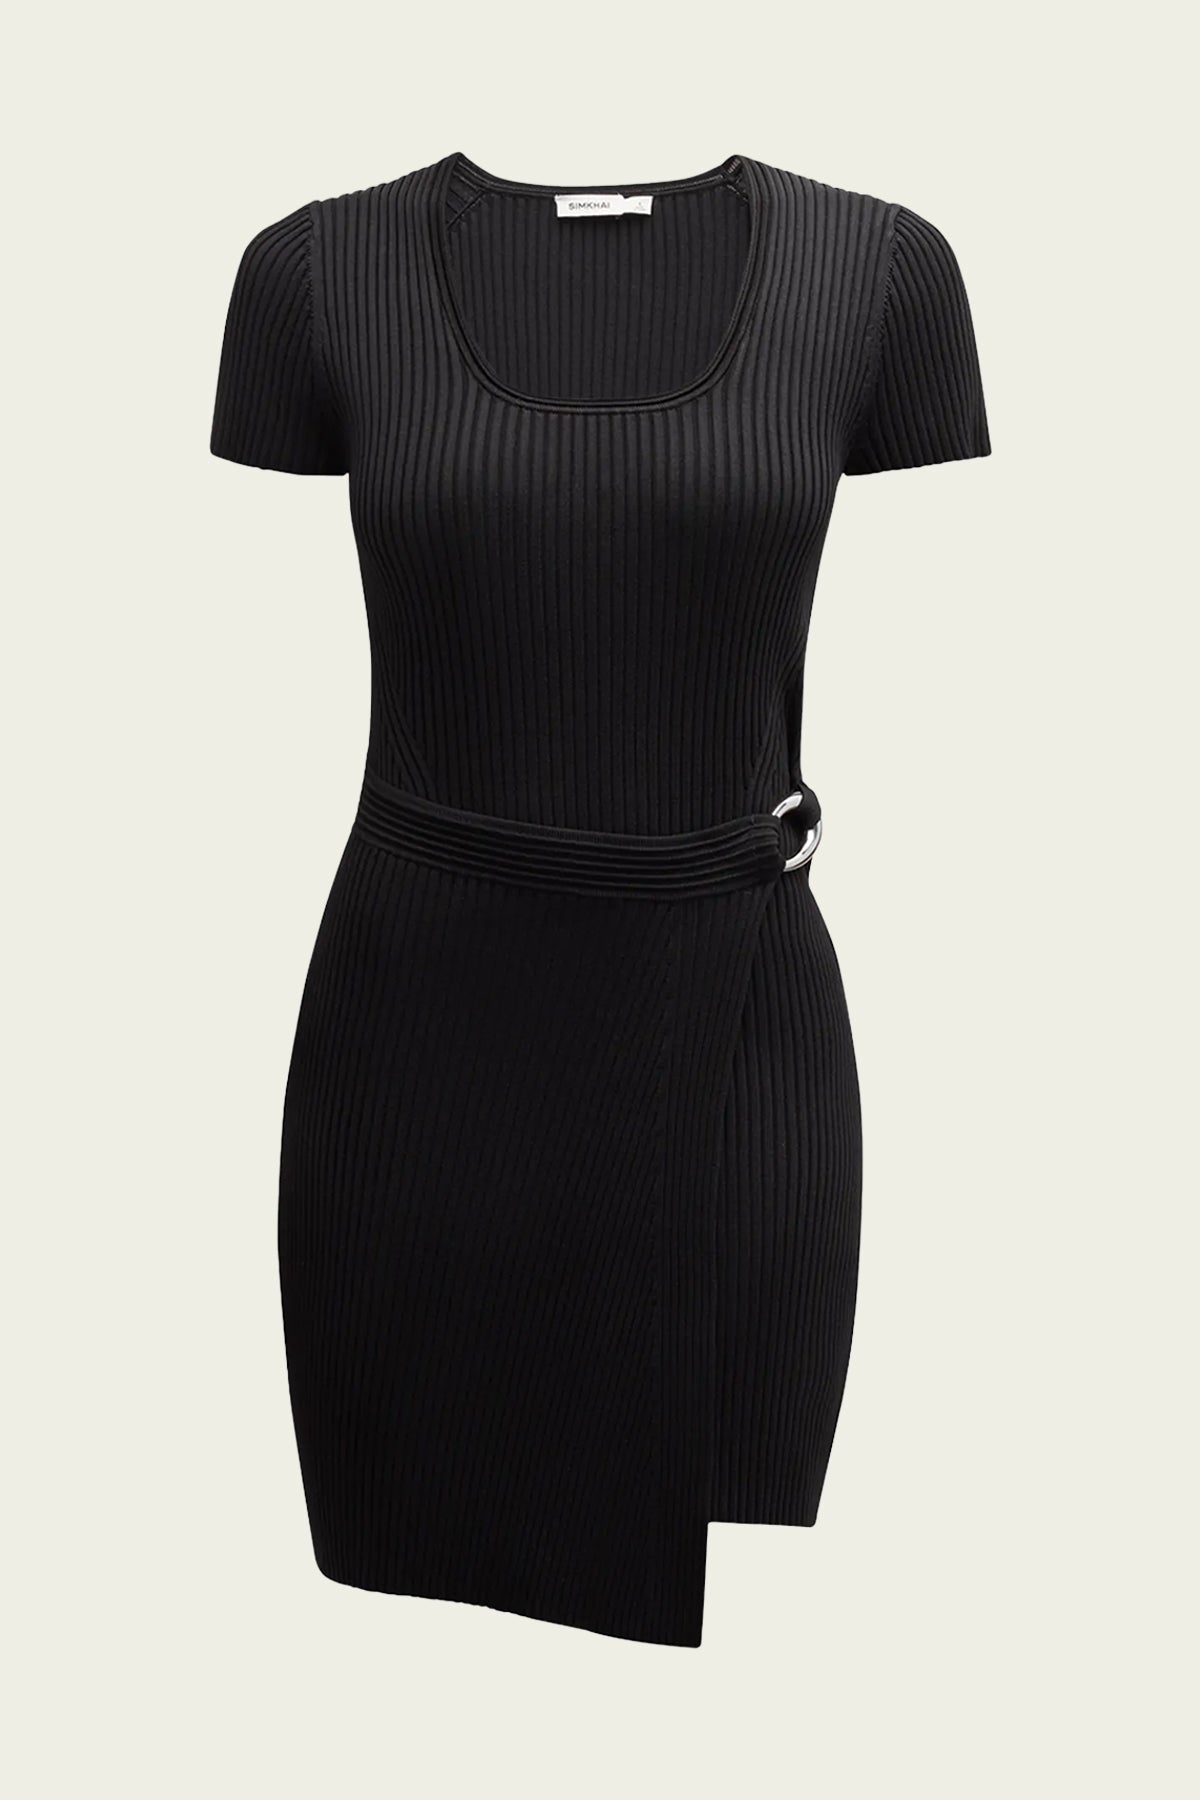 Melody Mini Dress in Black - shop - olivia.com